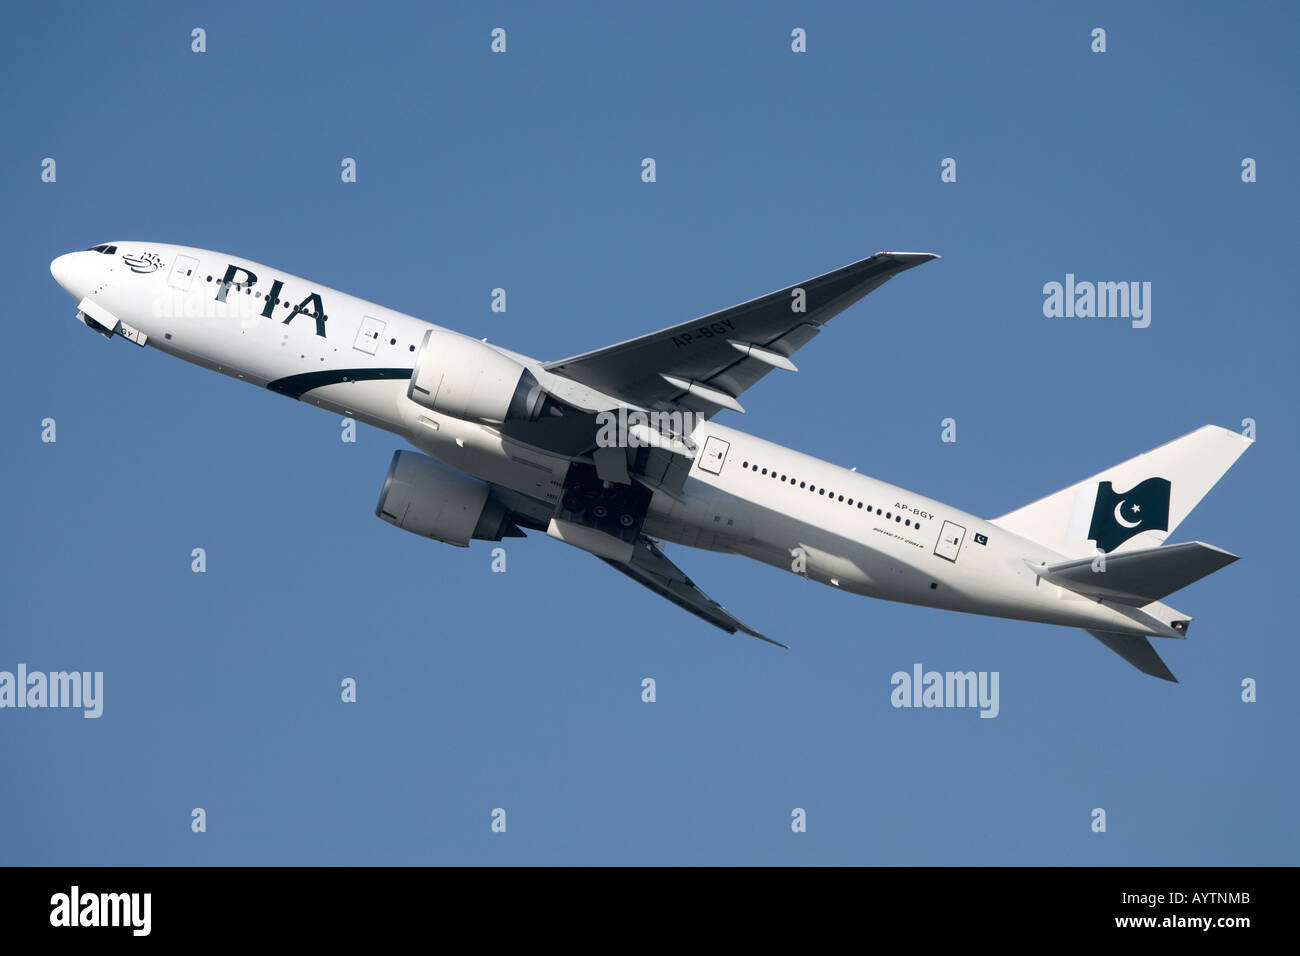 PIA Pakistan International Airlines Boeing 777 Triple seven Stockfotografie  - Alamy